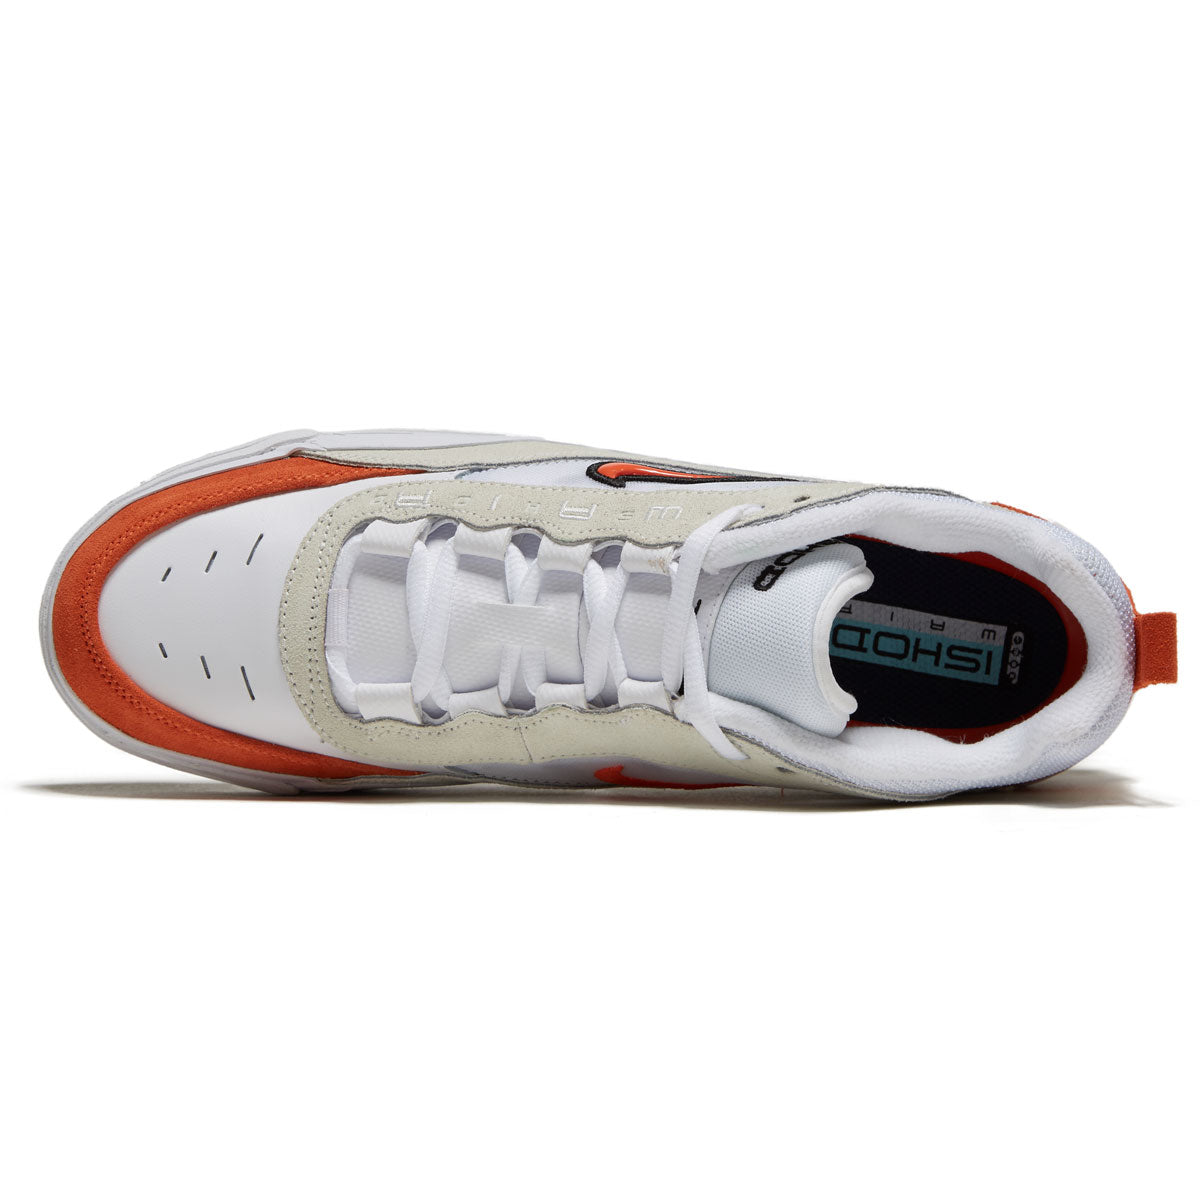 Nike SB Air Max Ishod Shoes - White/Orange/Summit White/Black image 3